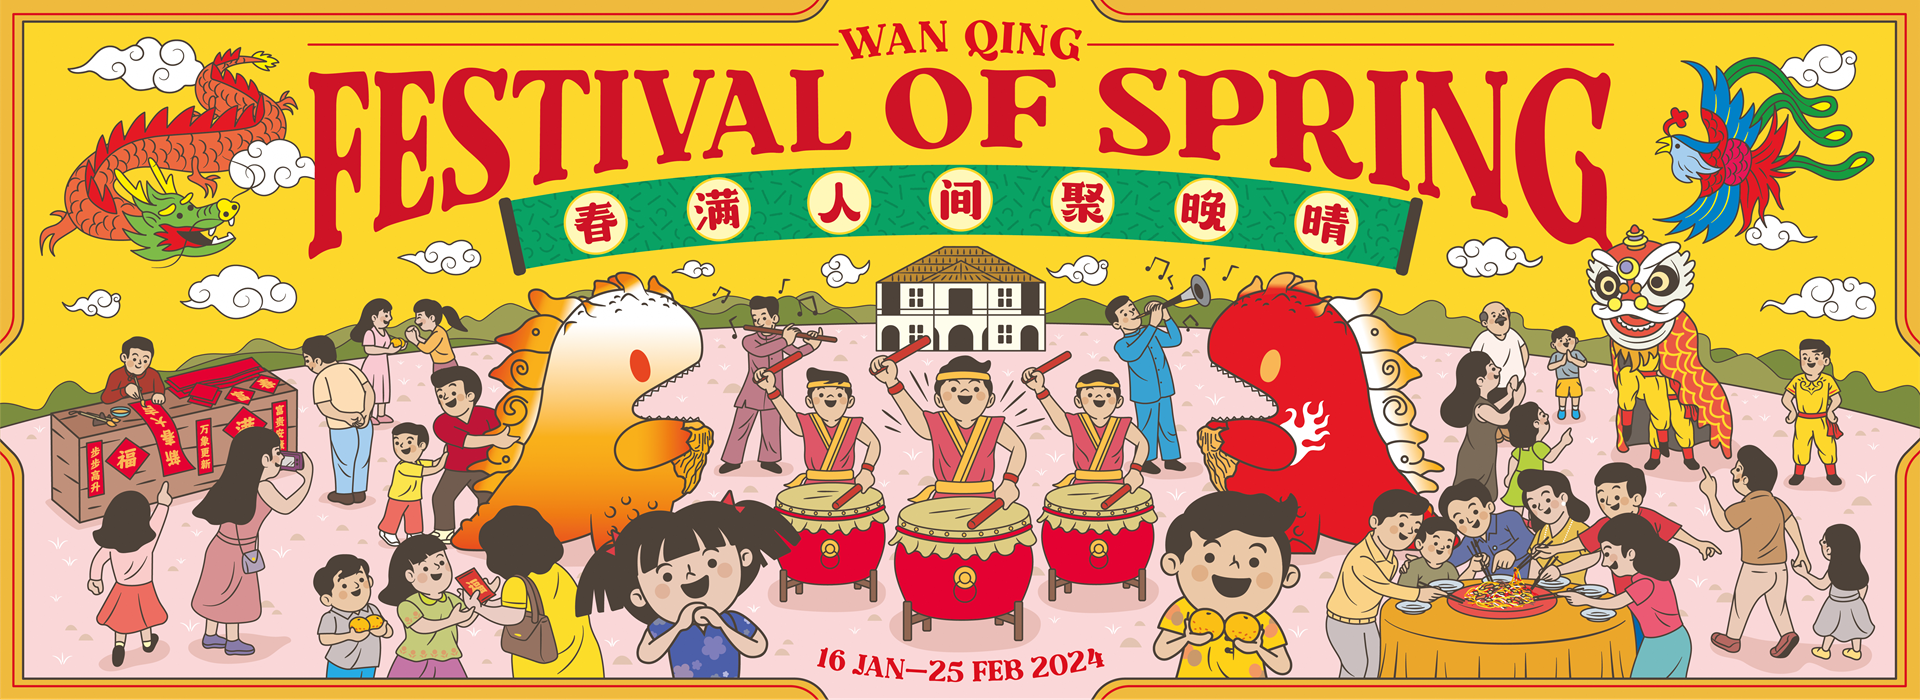 Wan Qing Festival of Spring 2024